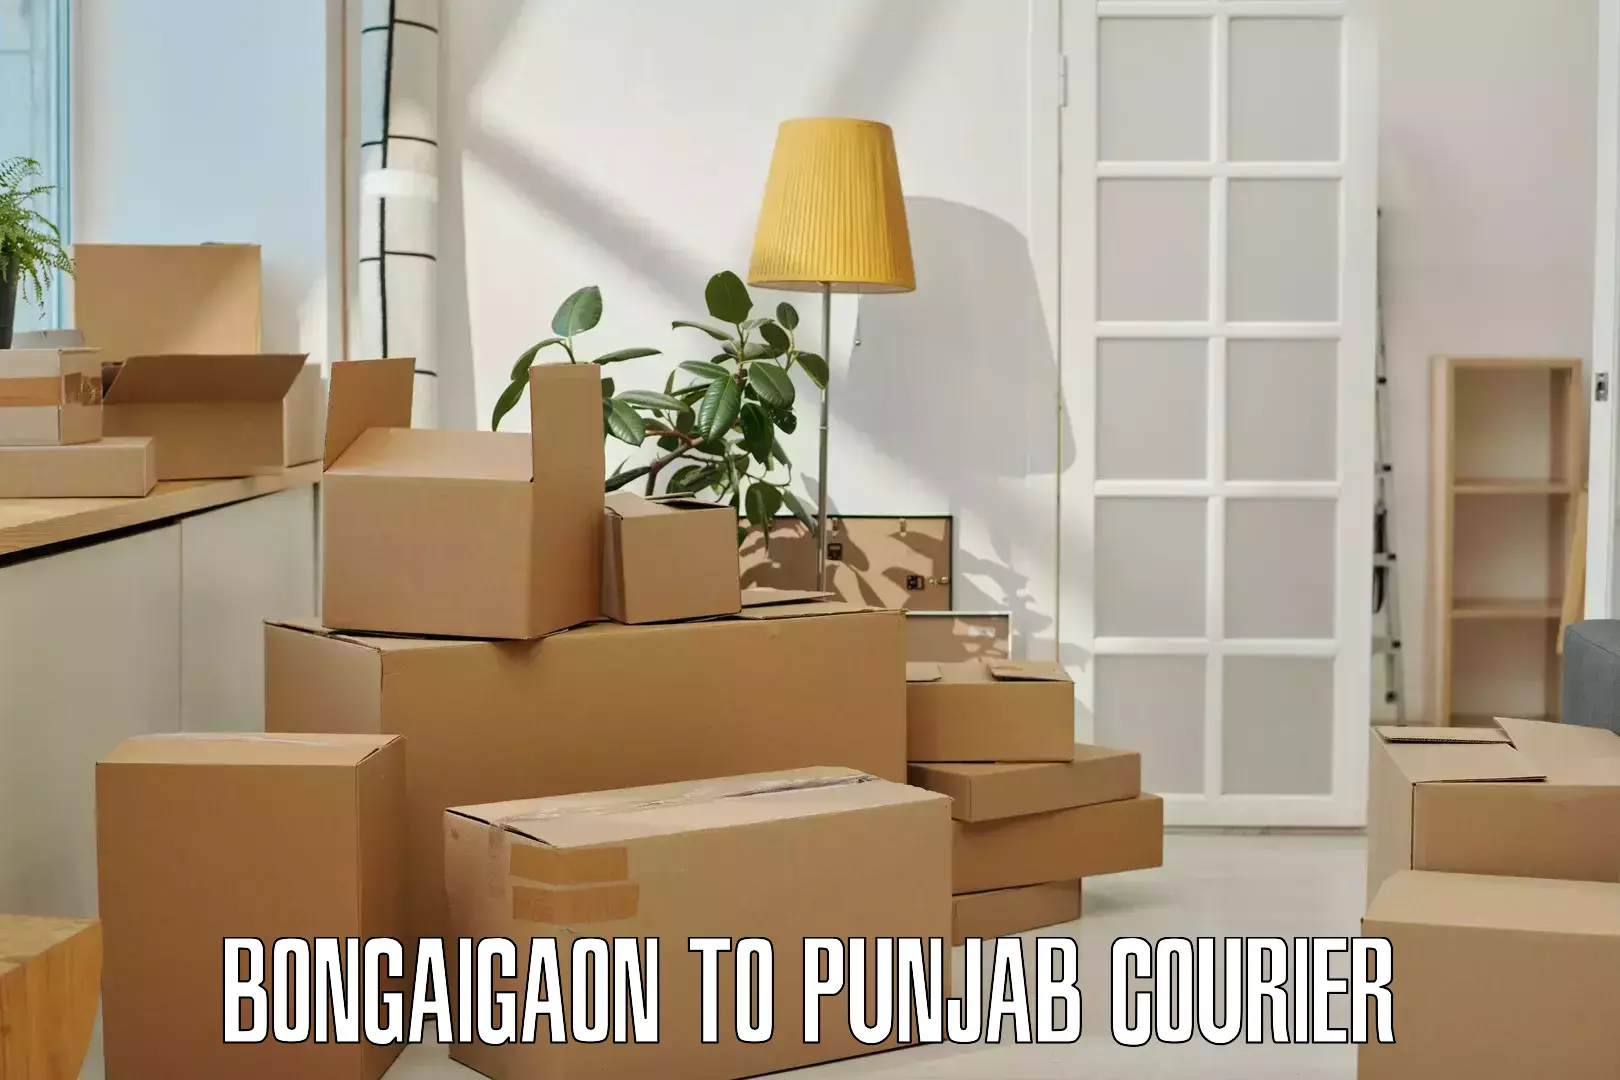 Full-service courier options Bongaigaon to Barnala